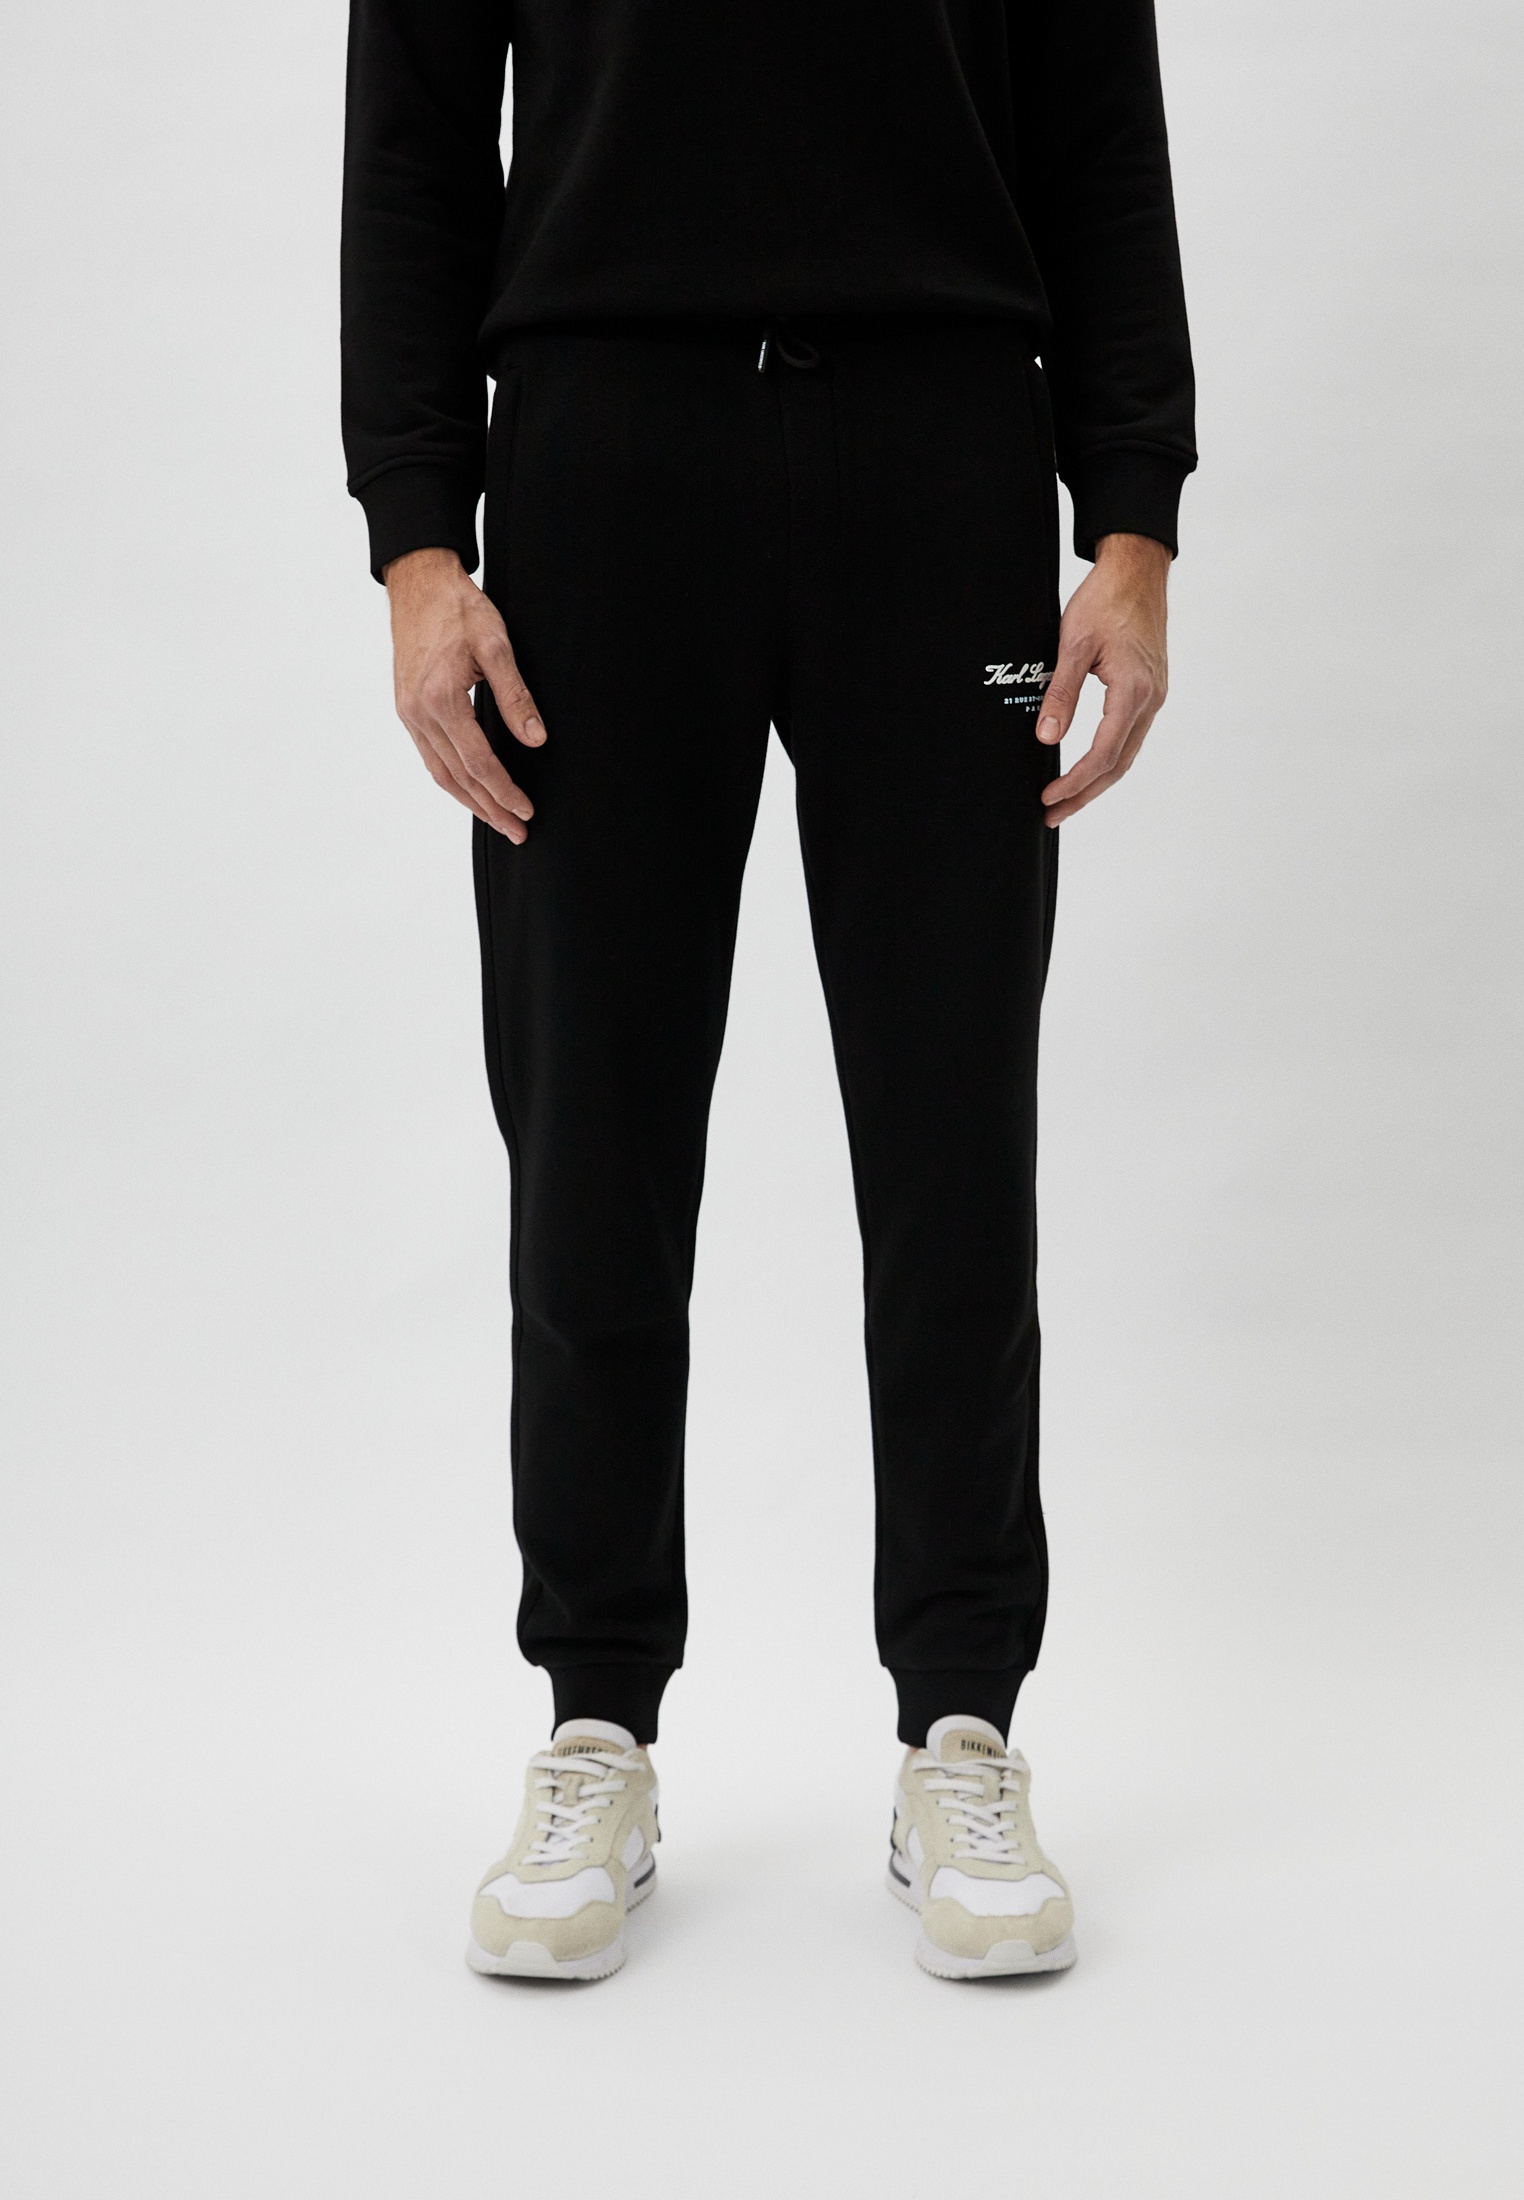 Мужские спортивные брюки Karl Lagerfeld (Карл Лагерфельд) 705406-541900